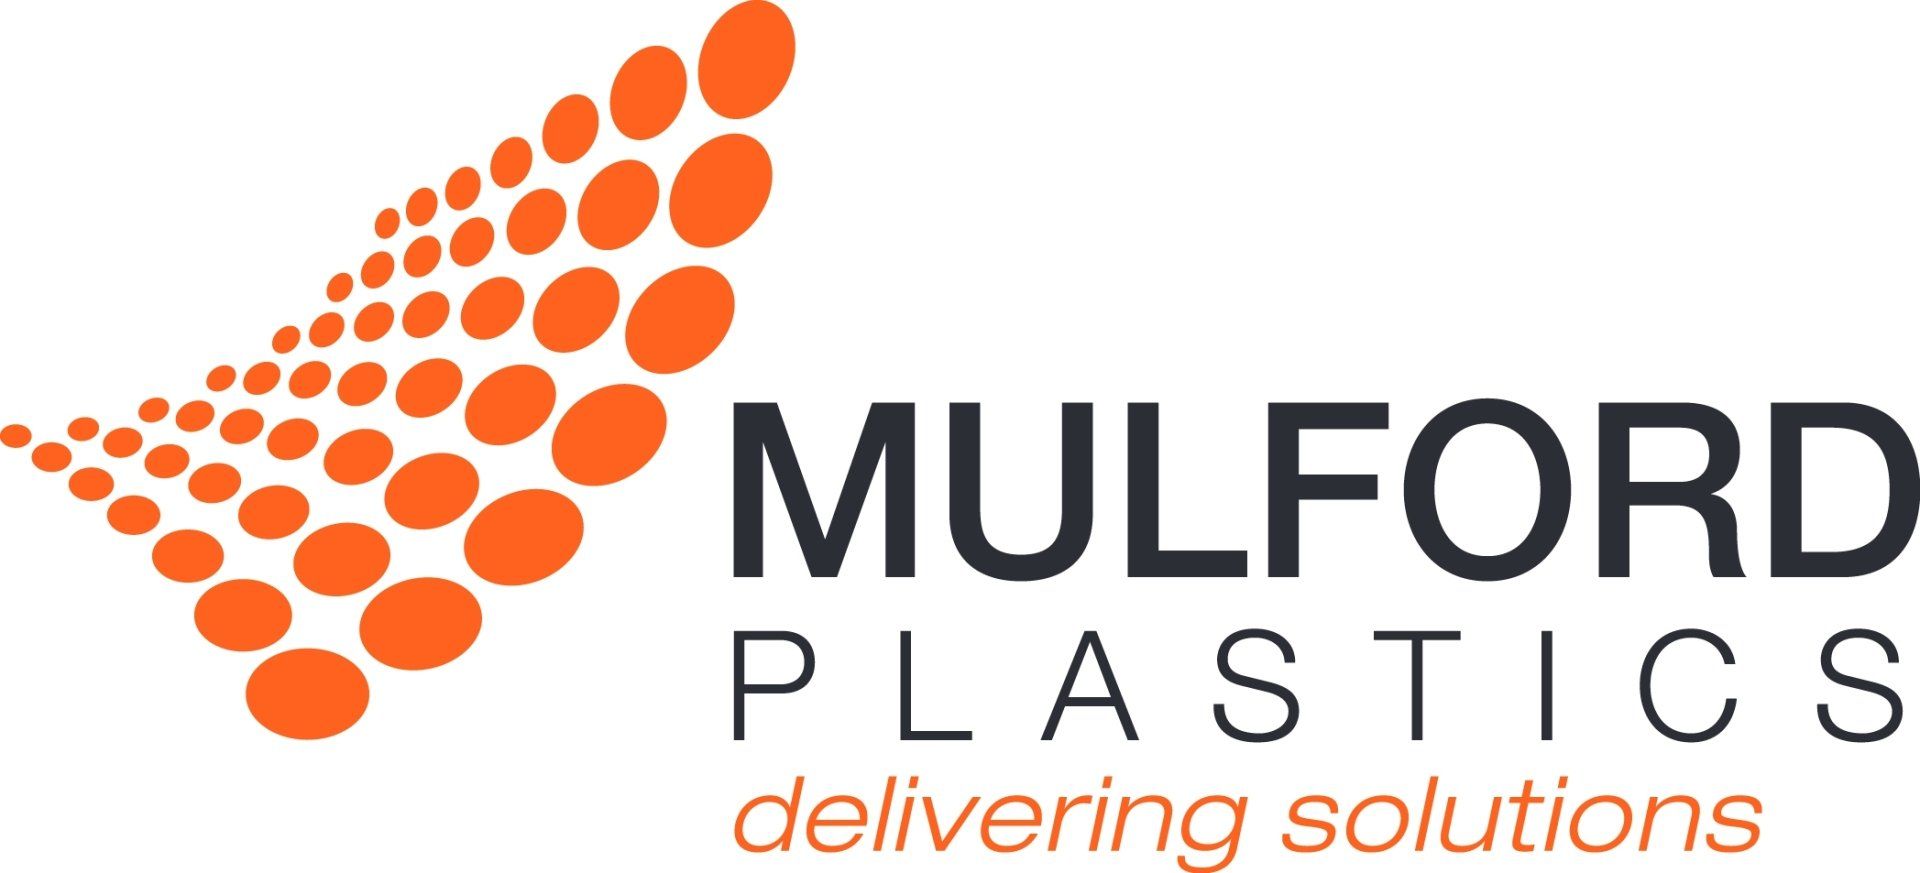 mulford plastics logo